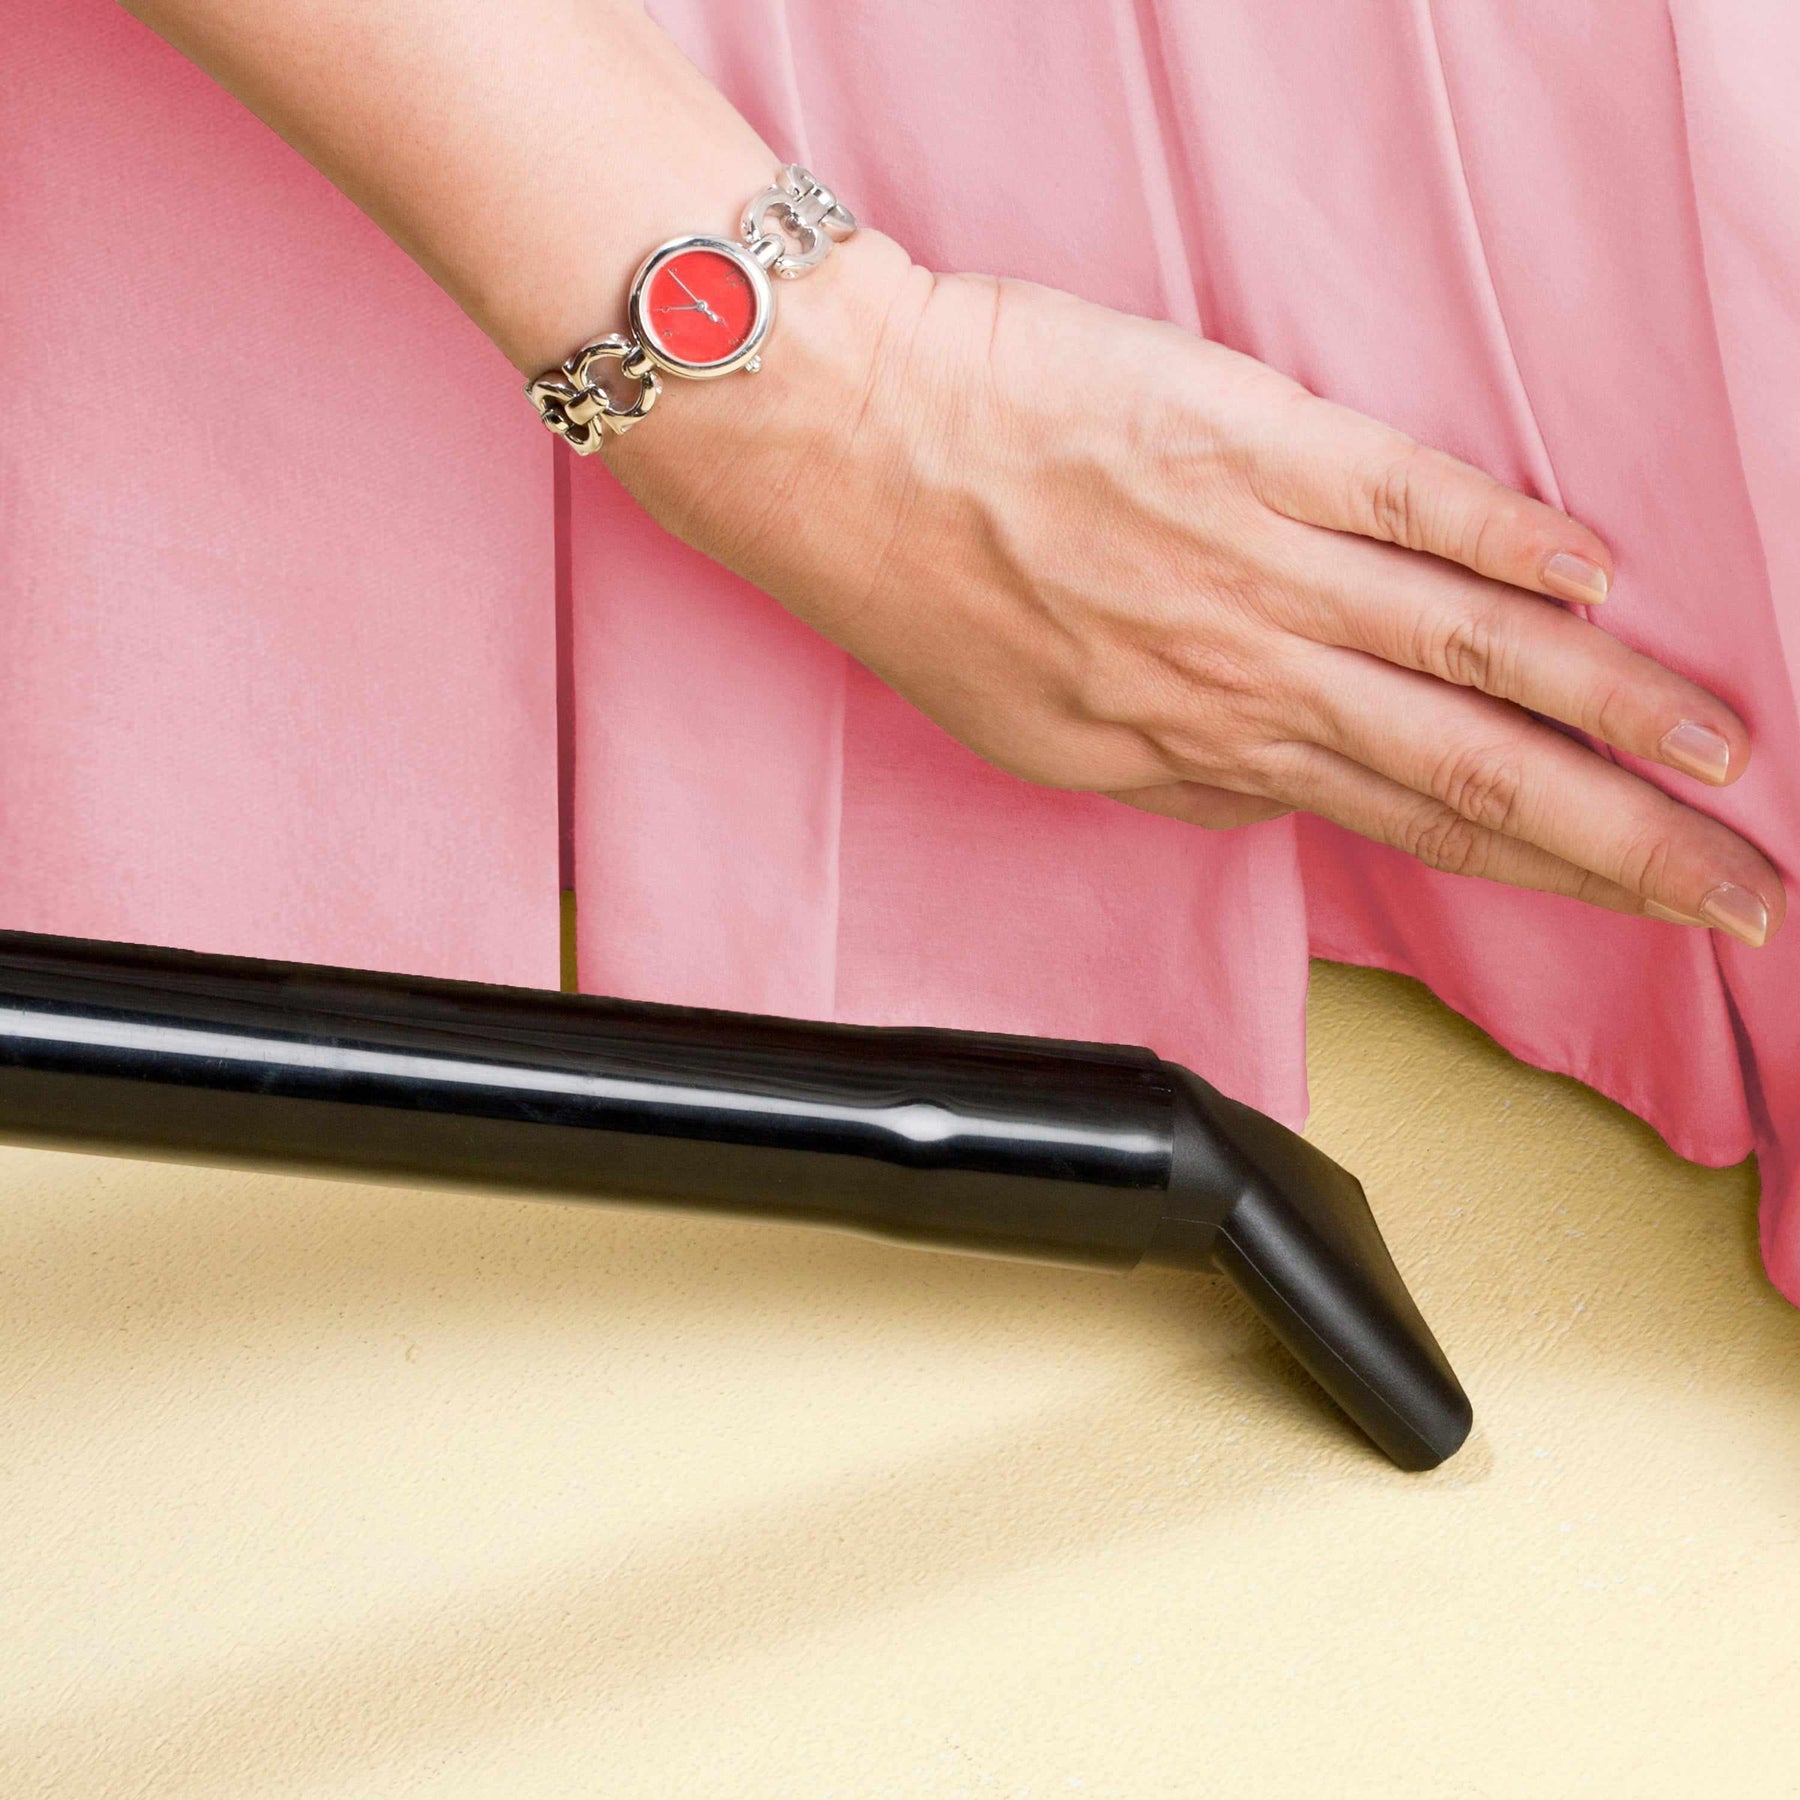 Microfiber Wrinkle-Free Solid 15-Inch Drop Bed Skirt - Pink